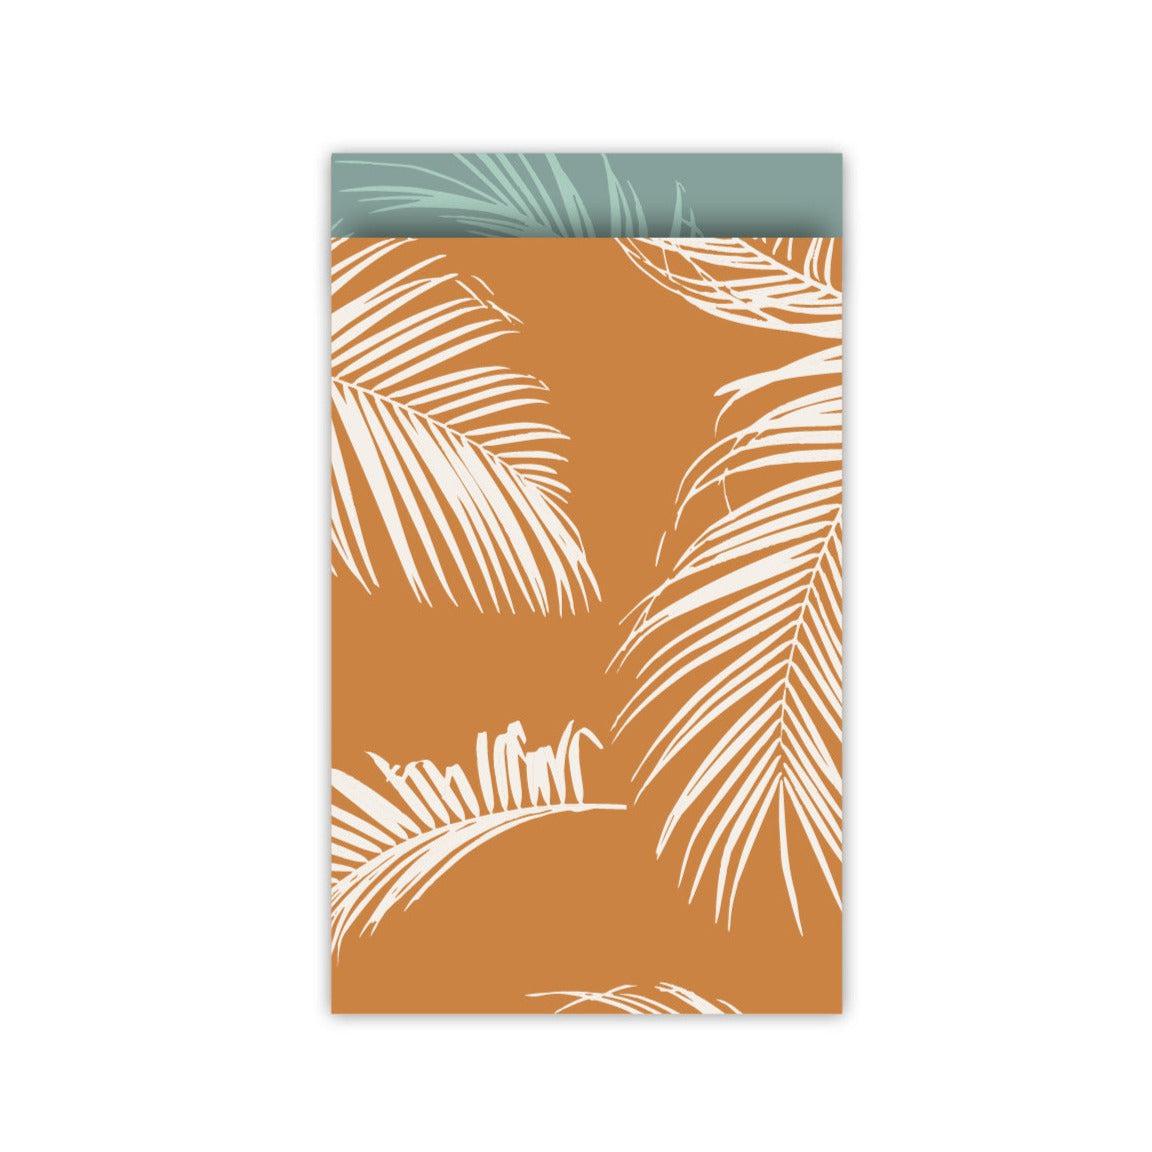 Cadeauzakjes Palm leaves roest/wit 12x19cm - 5 stuks-Gifts-Kraaltjes van Renate